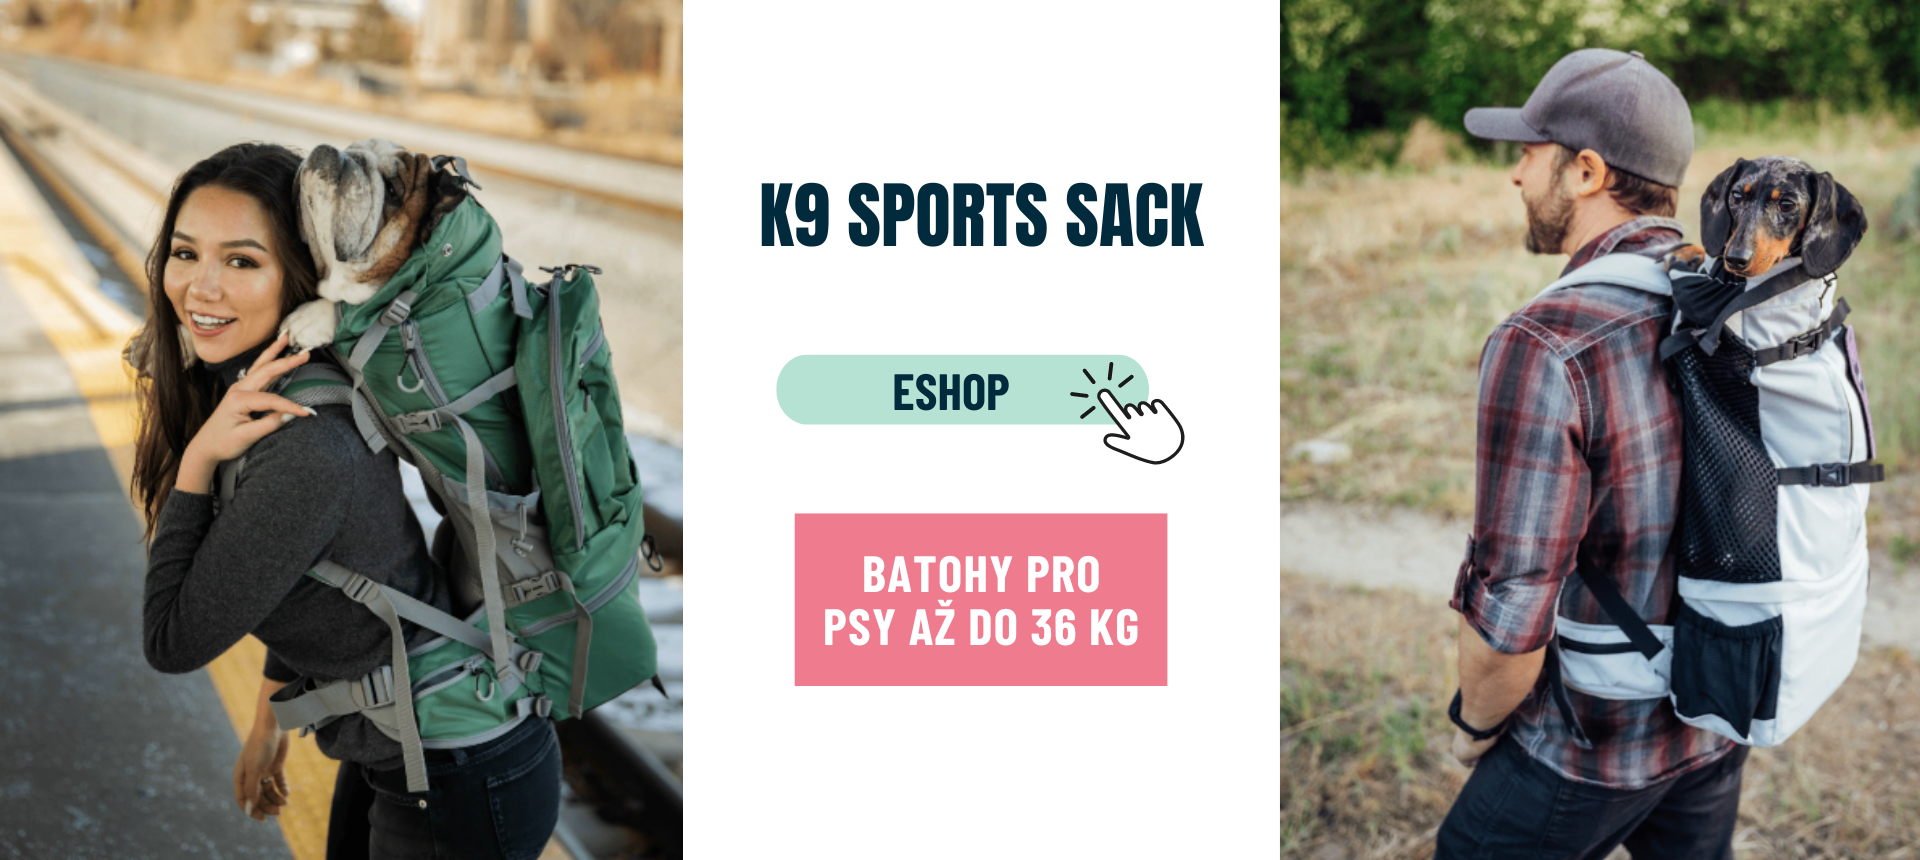 K9 Sports sack batohy na psy